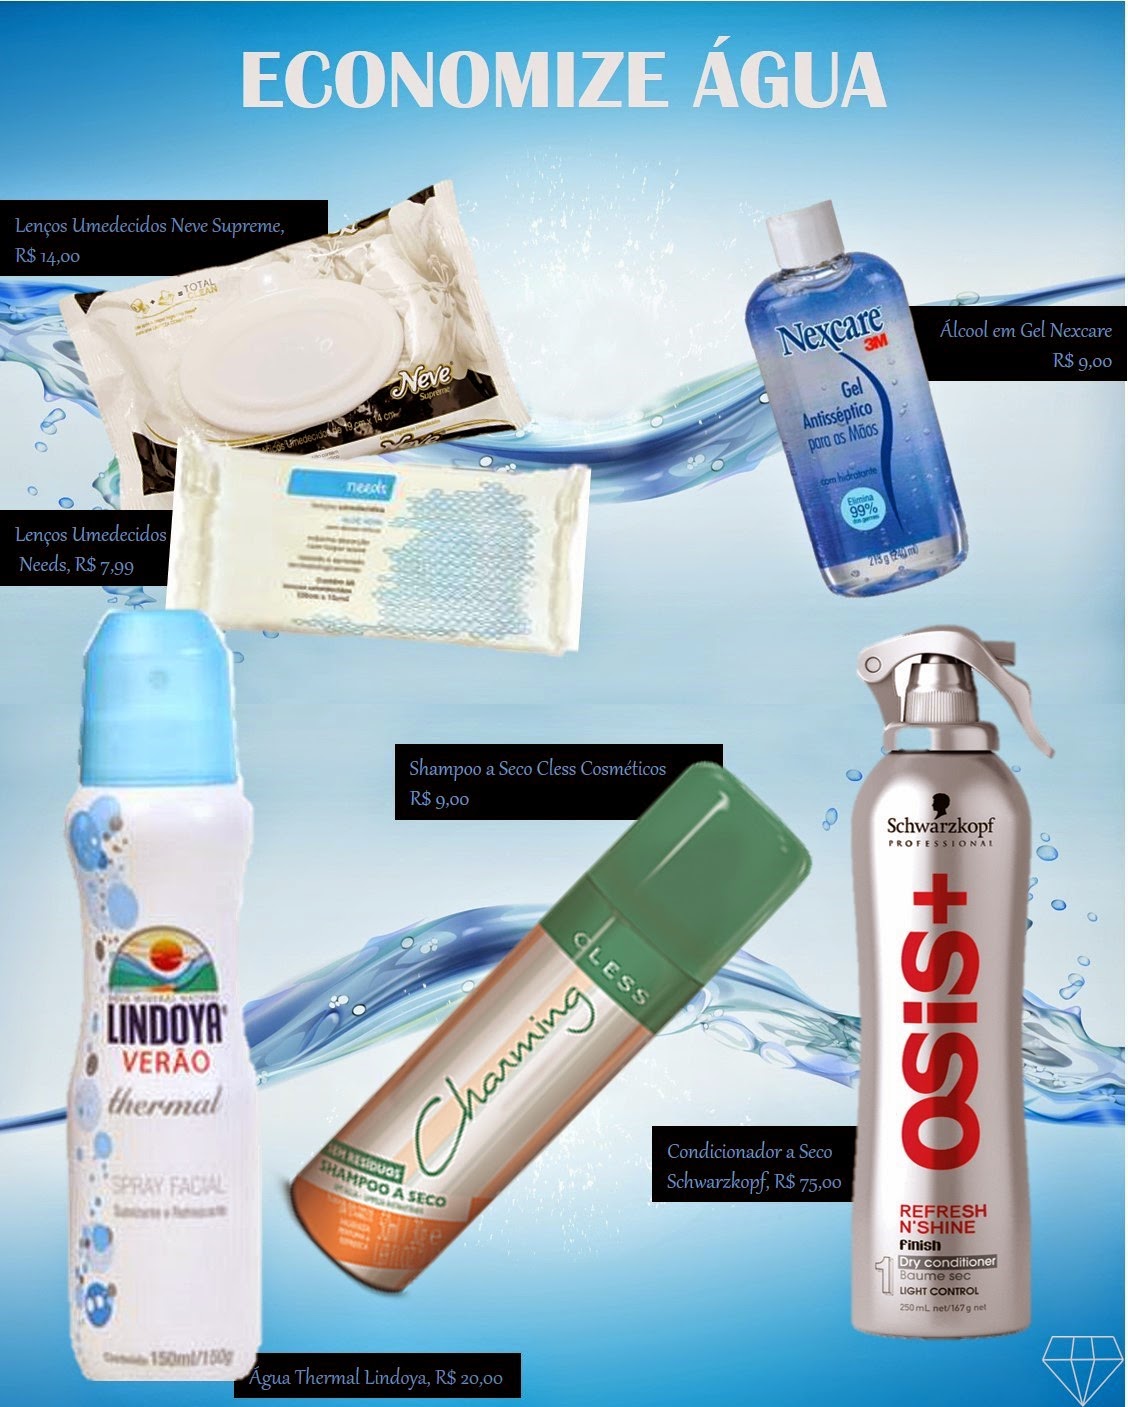 cosmeticos para economizar agua